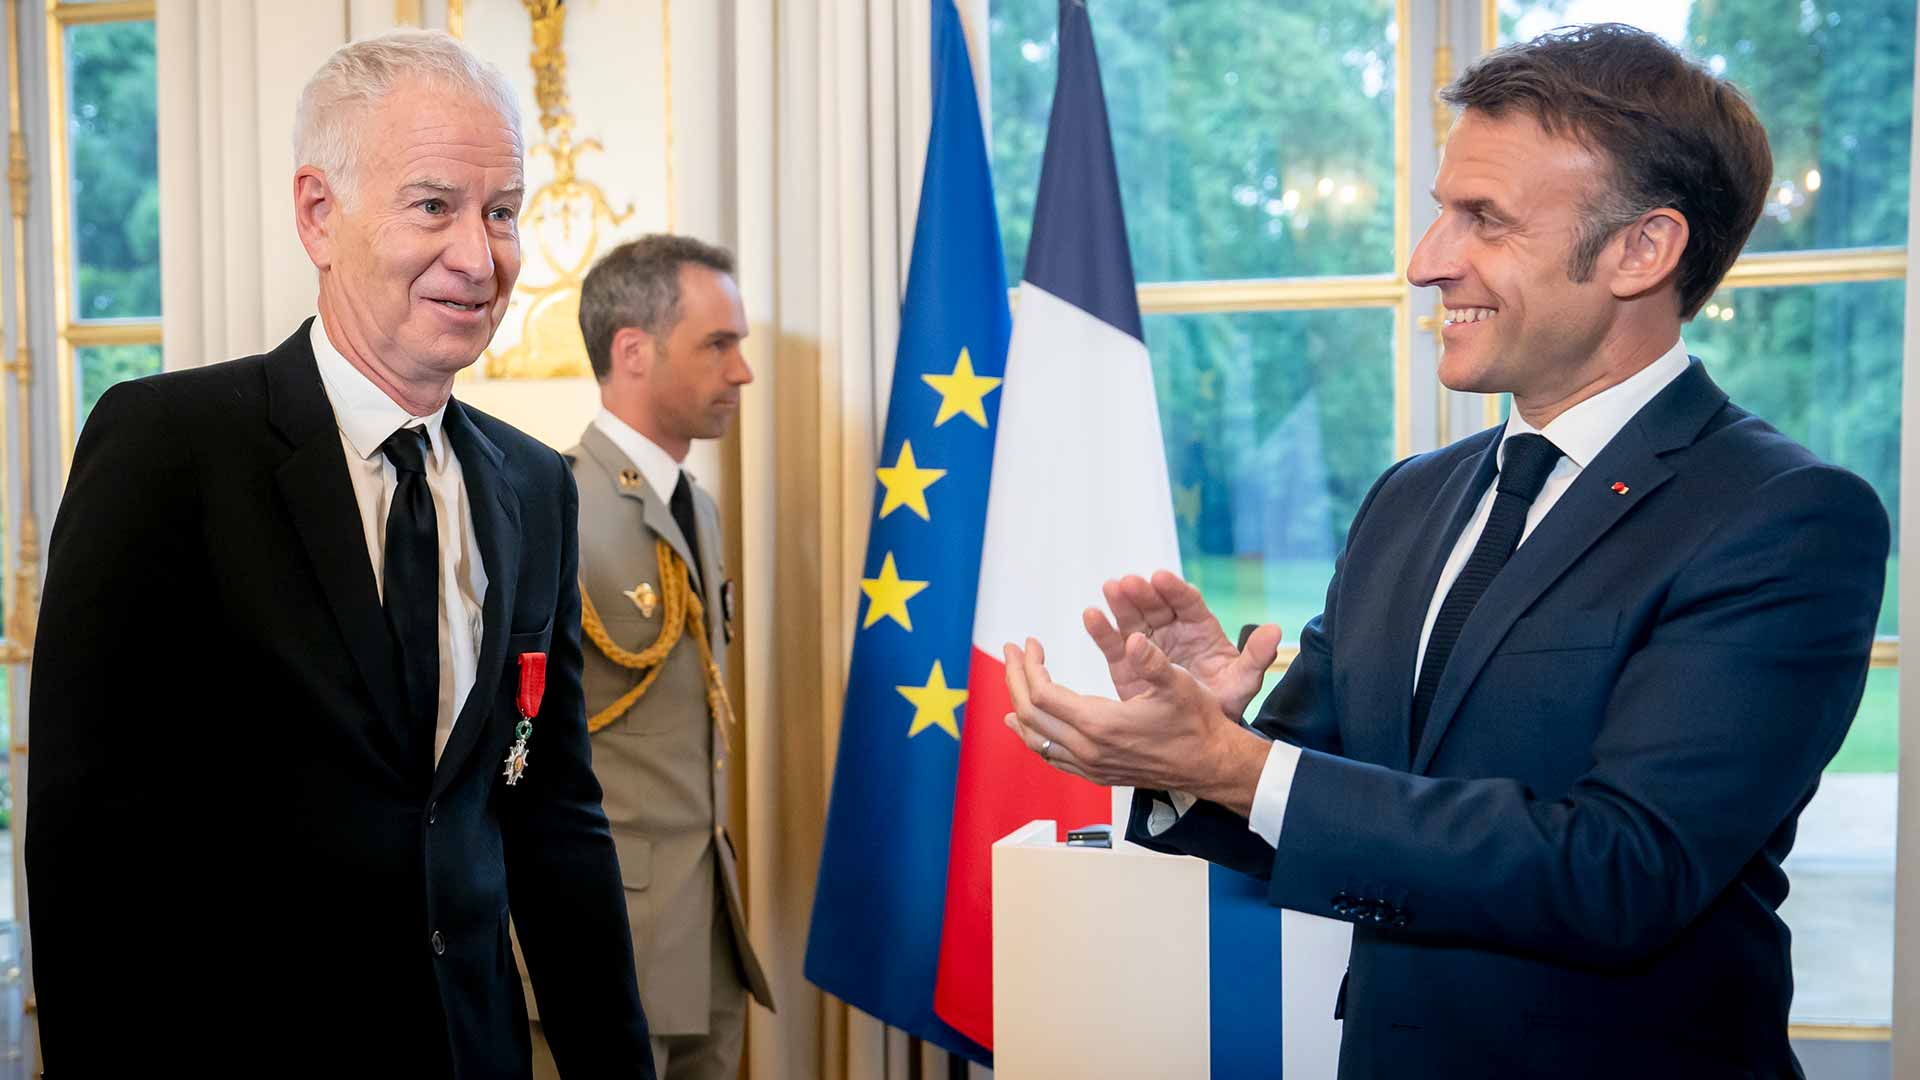 McEnroe receives French Legion of Honour award from President Macron